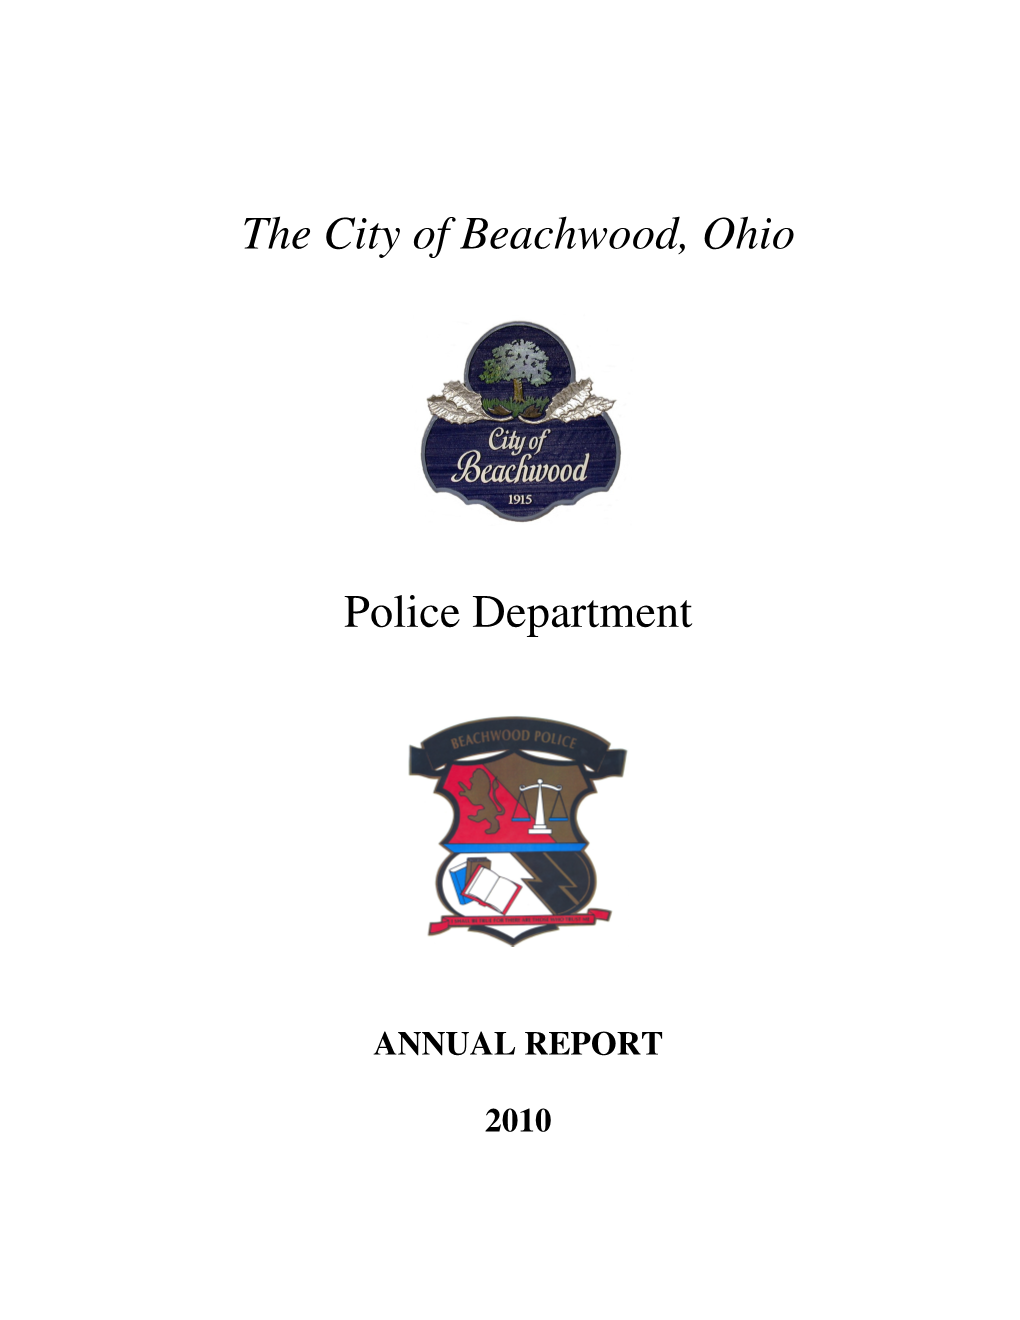 The City of Beachwood, Ohio Police Department